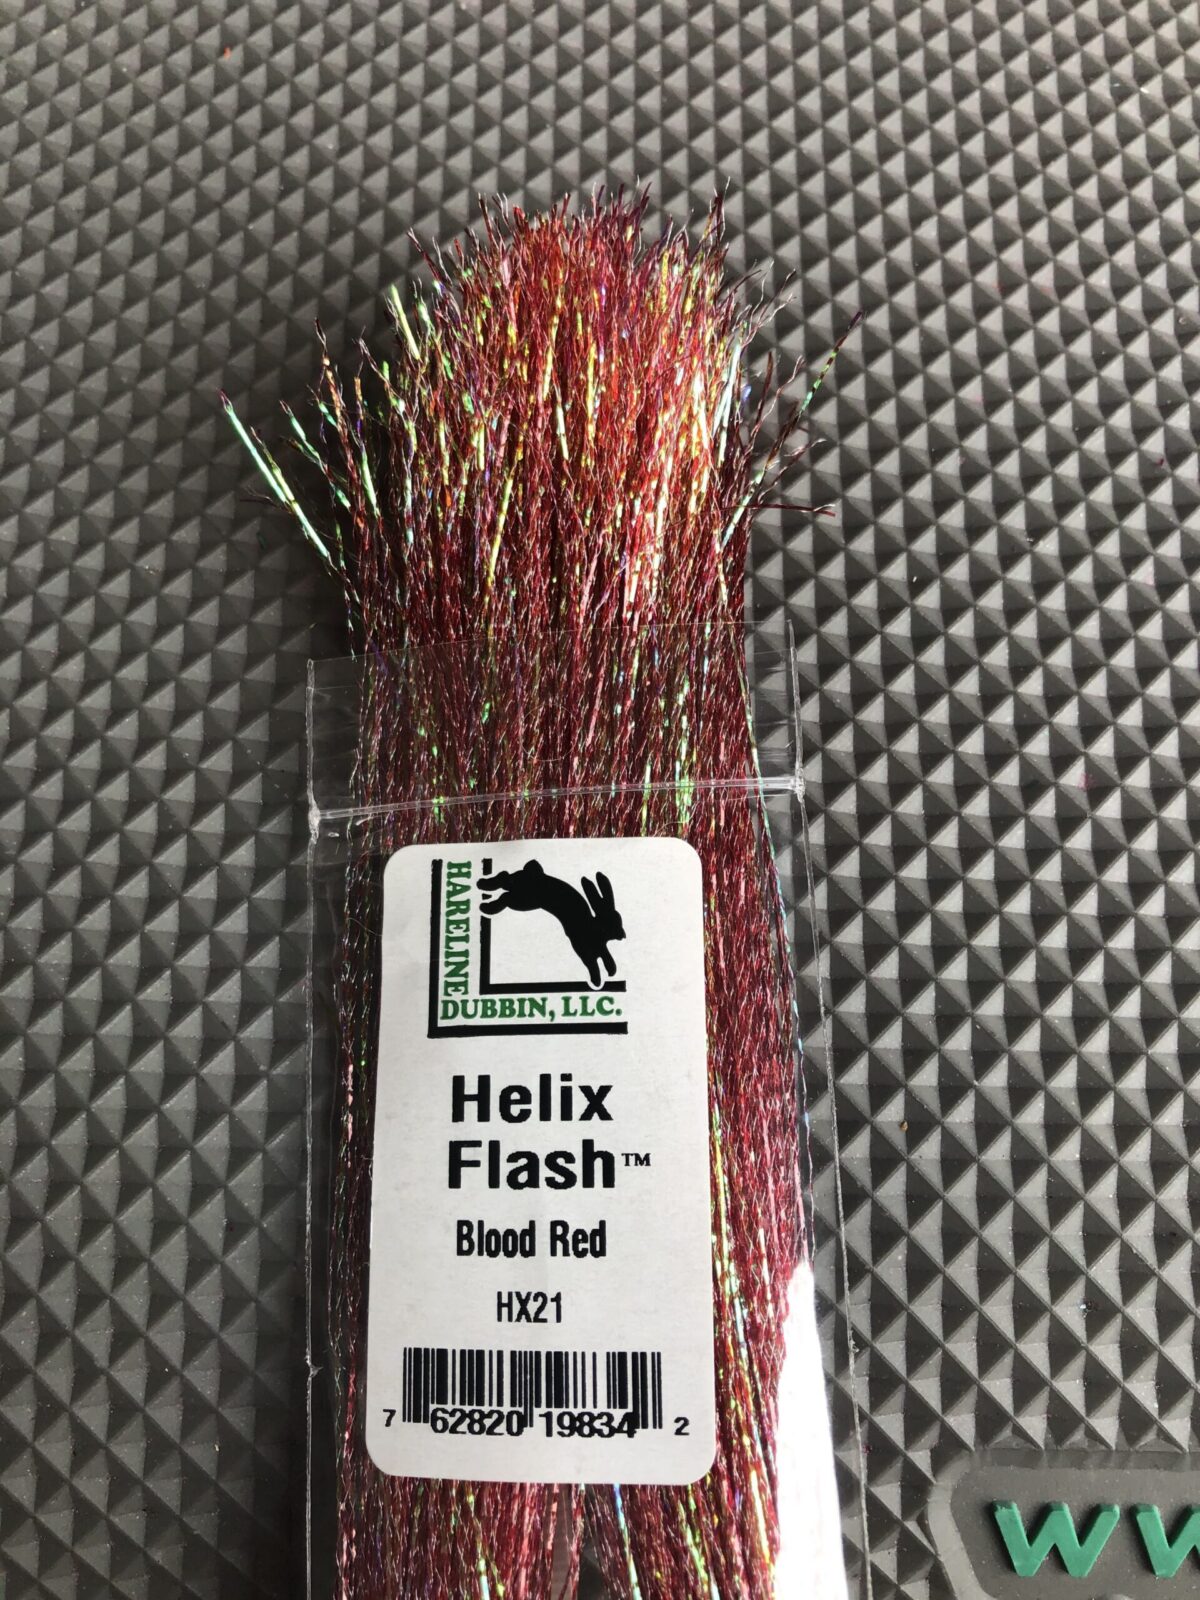 Helix Flash Blood Red Dinger Jigs e1586115144735 scaled 1200x1600 - Krystal Flash & Helix Flash